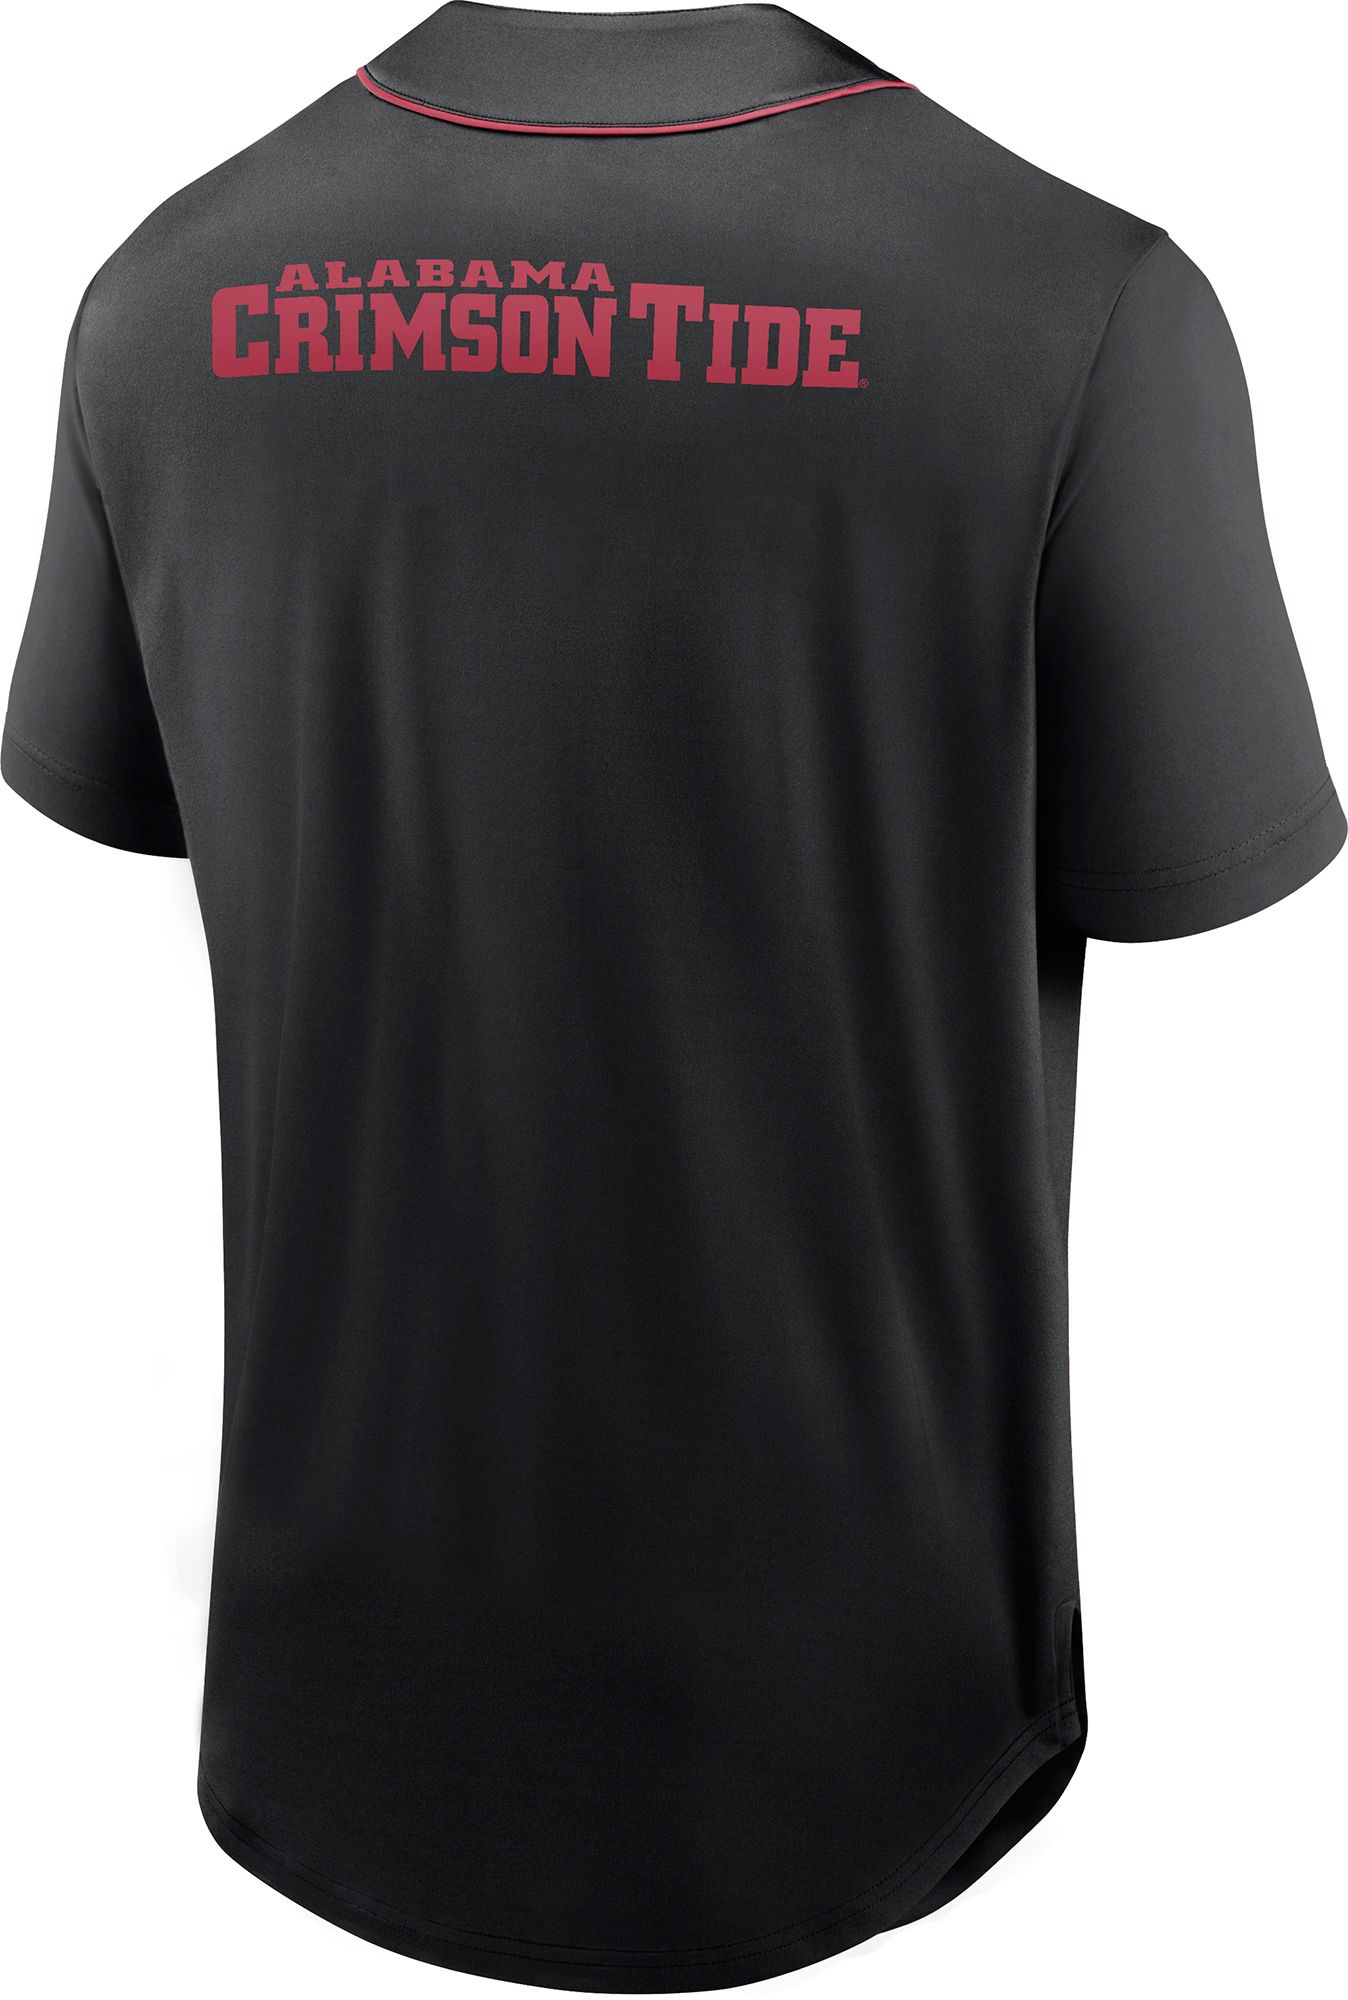 Crimson Tide baseball jersey